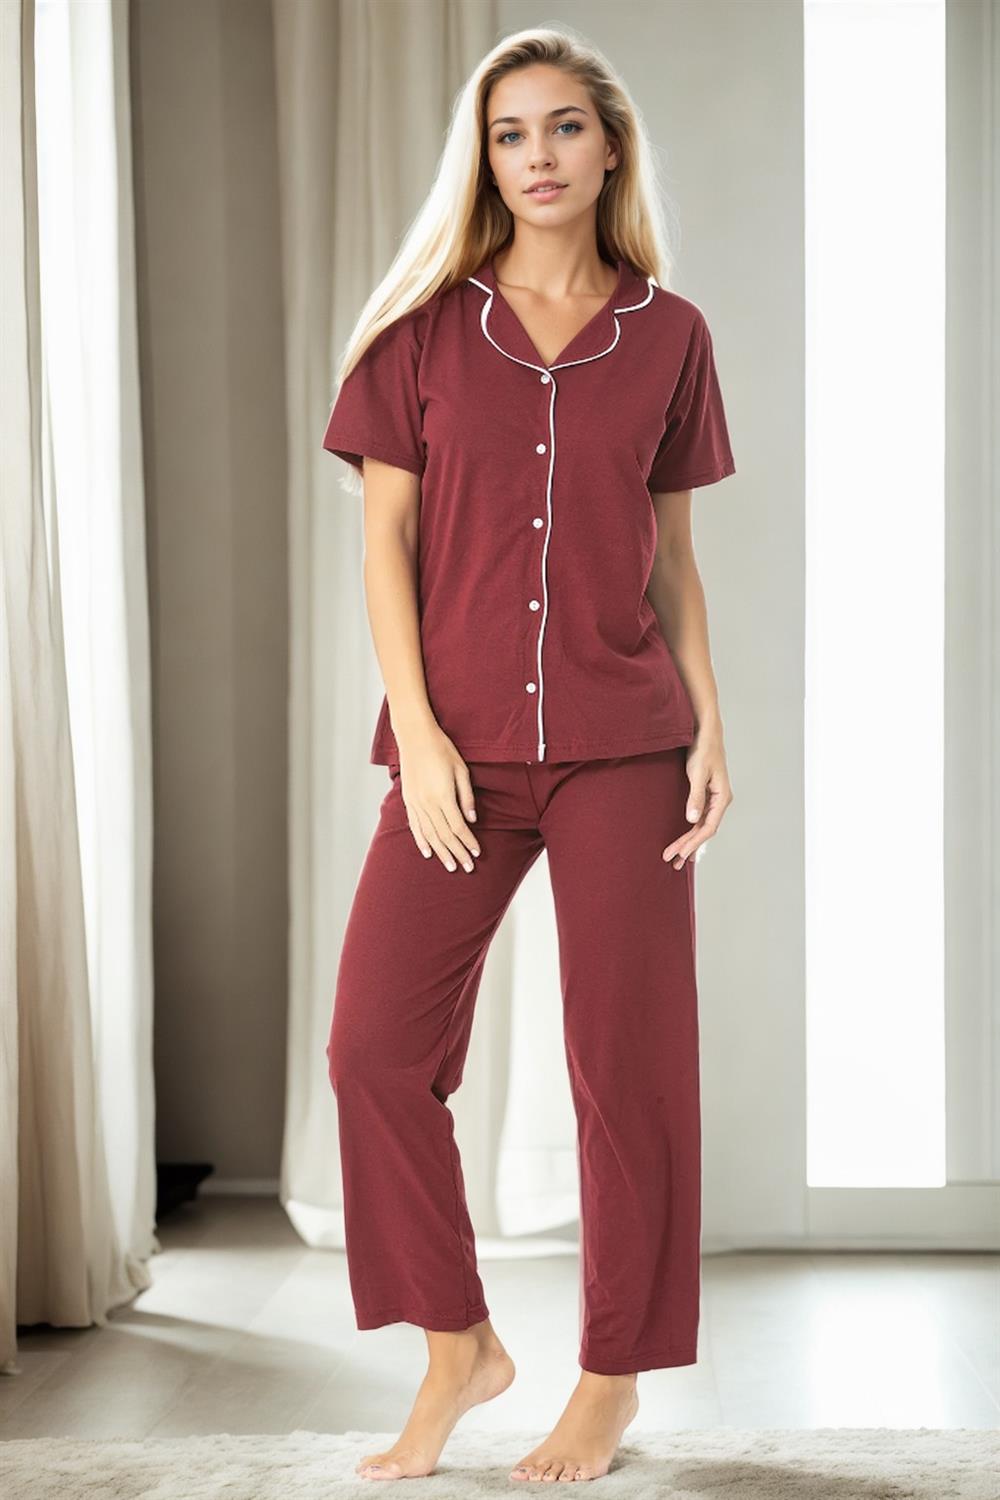 U4716 Dewberry Womens Short Sleeve Pyjama Set-BORDEAUX